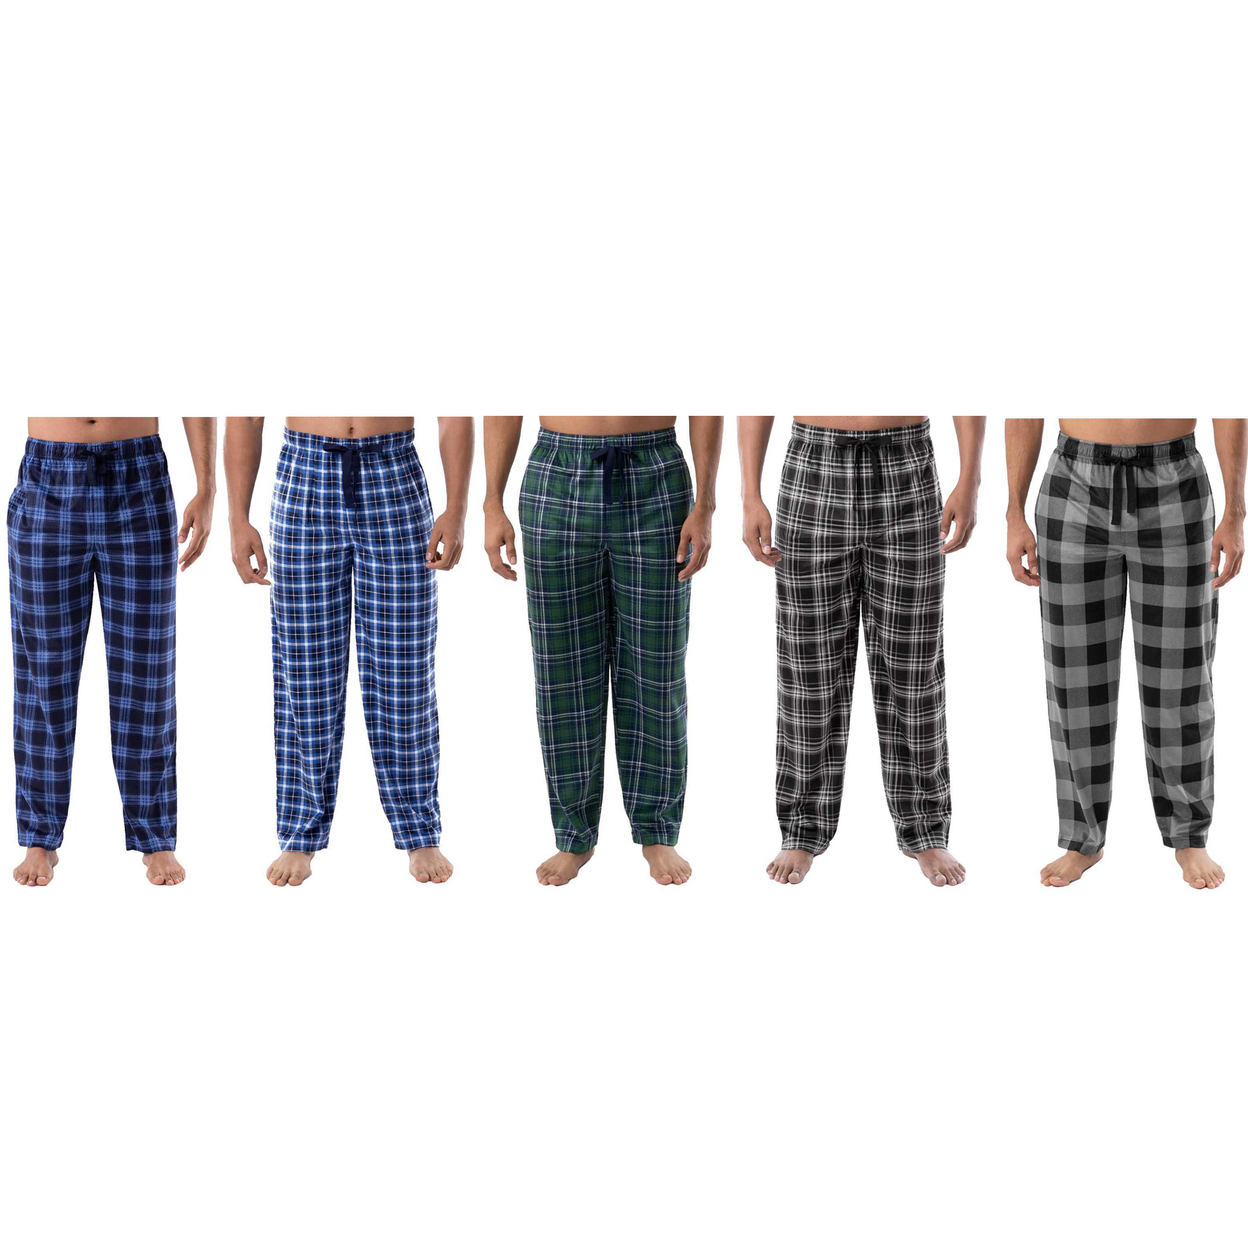 5-Pack: Men's Ultra-Soft Cozy Lounge Sleep Micro Fleece Plaid Pajama Pants - Xx-large